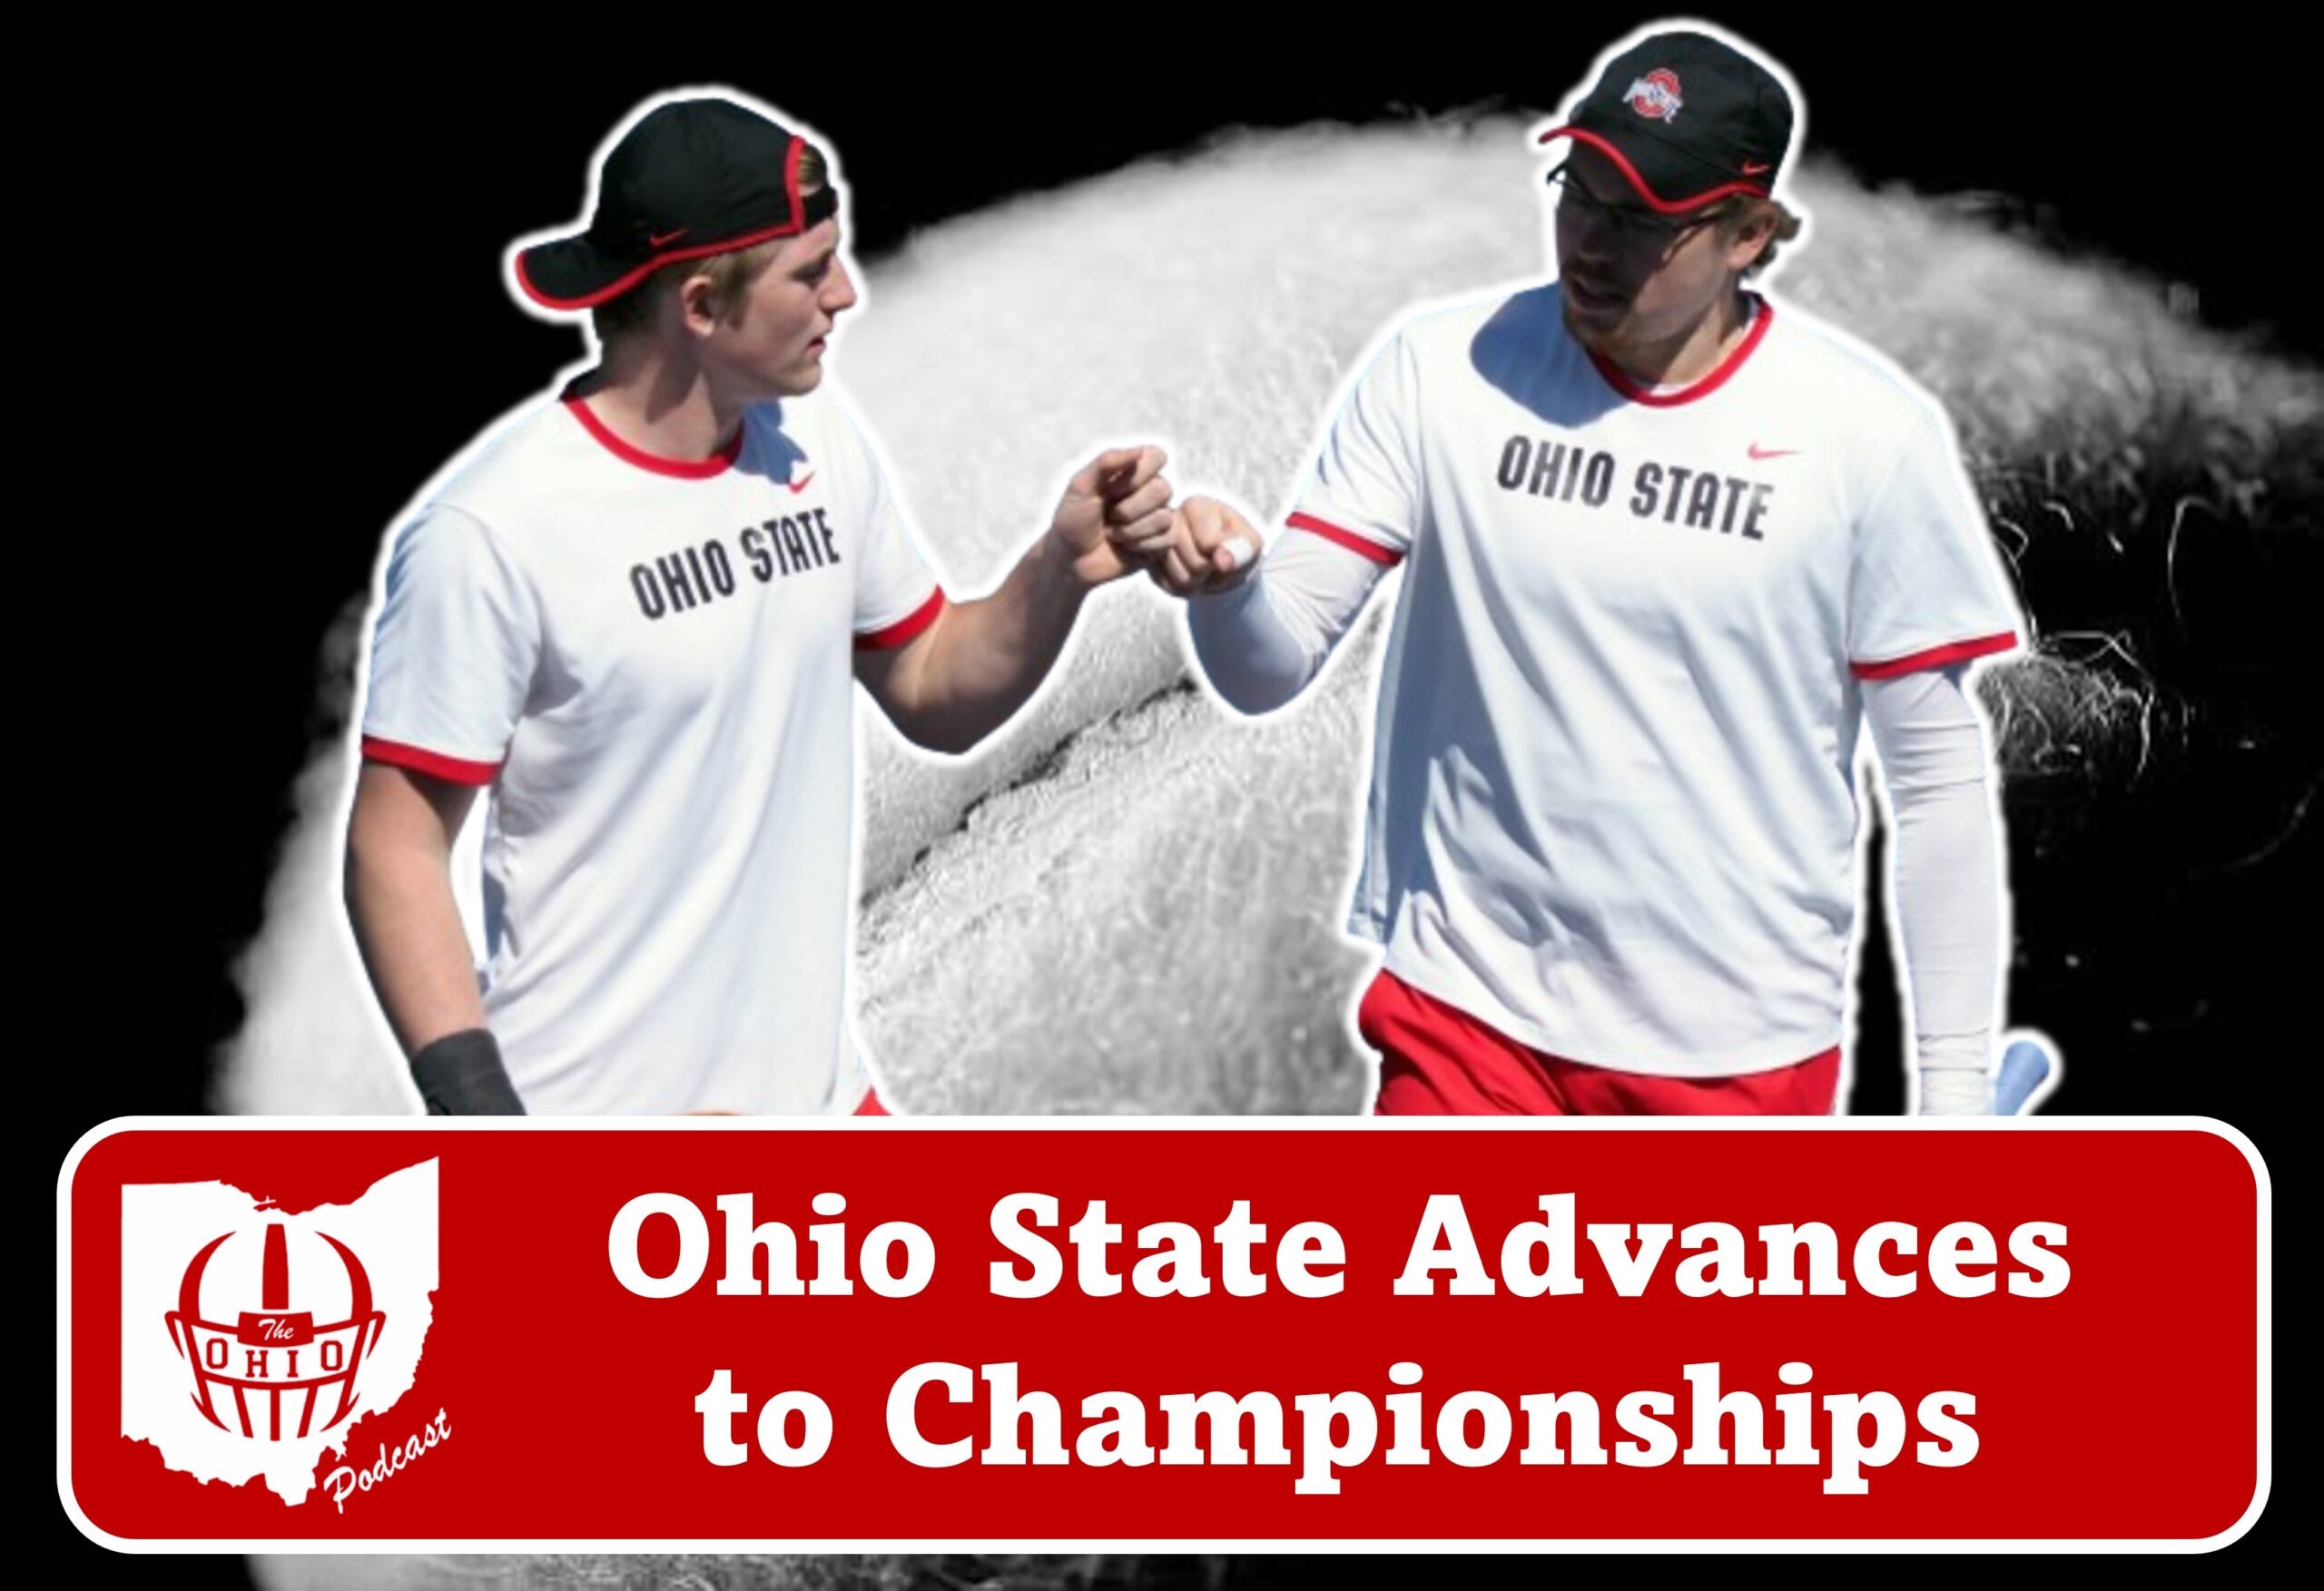 Ohio State Advances to Championships